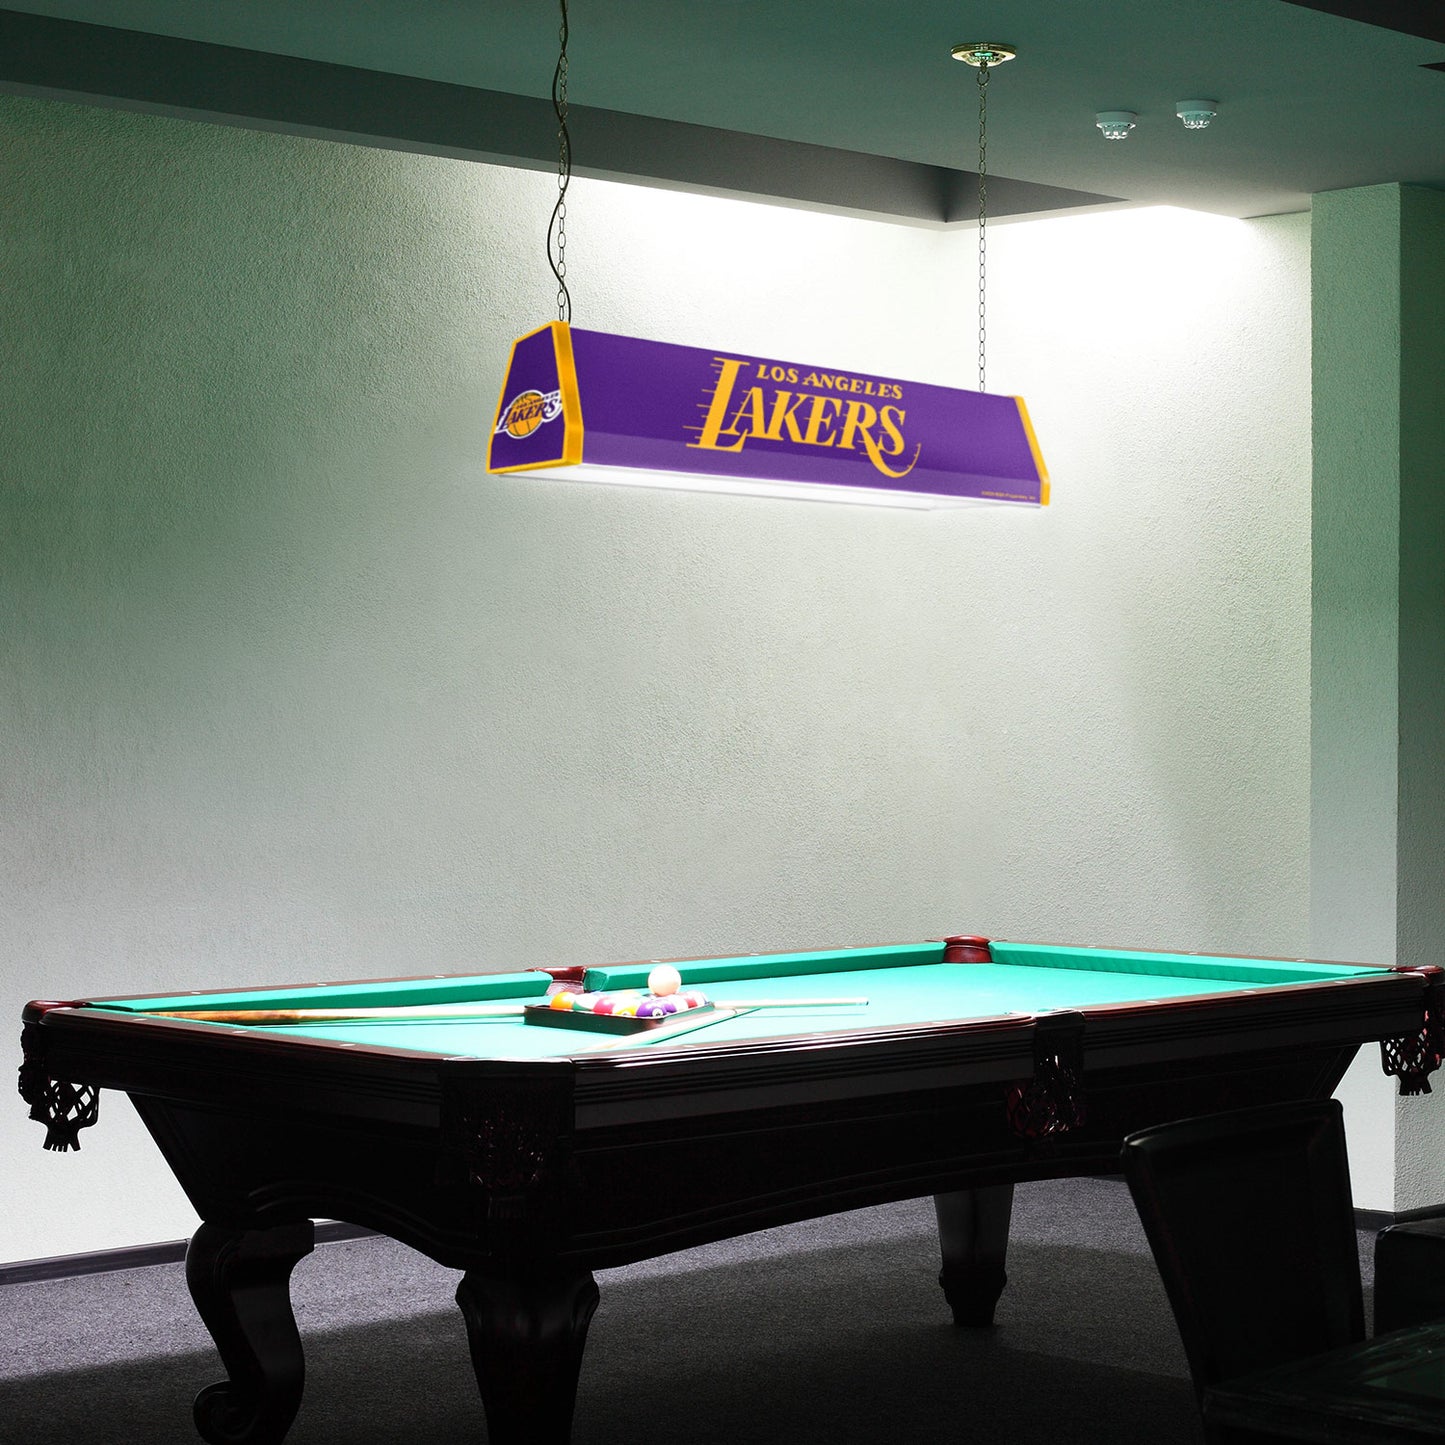 Los Angeles Lakers Standard Pool Table Light Room View